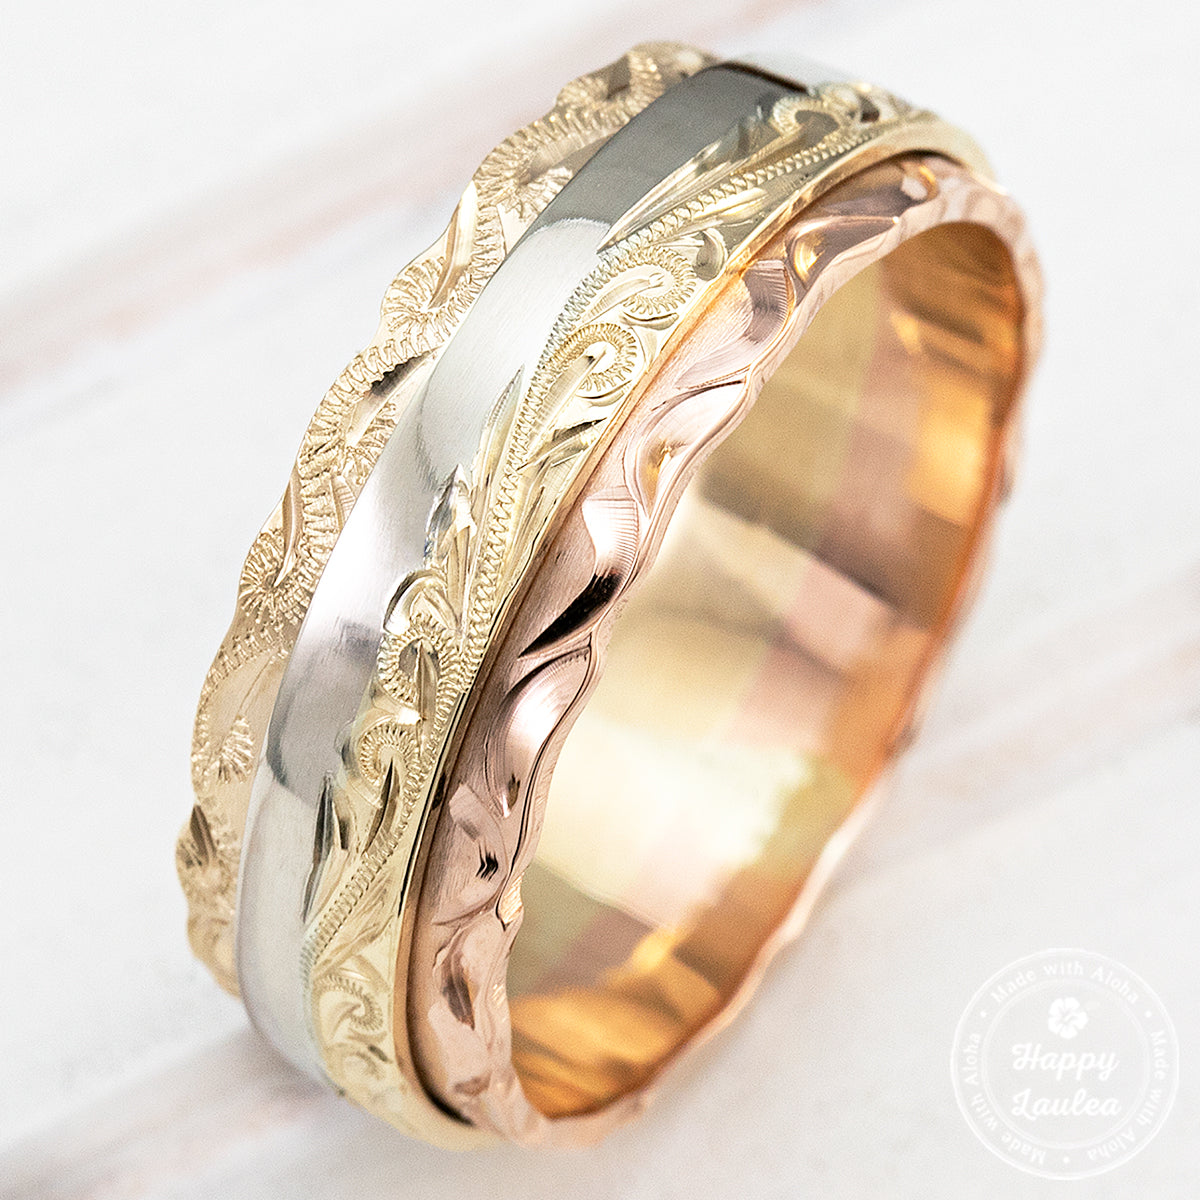 14K Gold Tri Tone 8mm width Hawaiian Jewelry Ring Hand Engraved Old English Design - Flat Shape, Standard Fitment